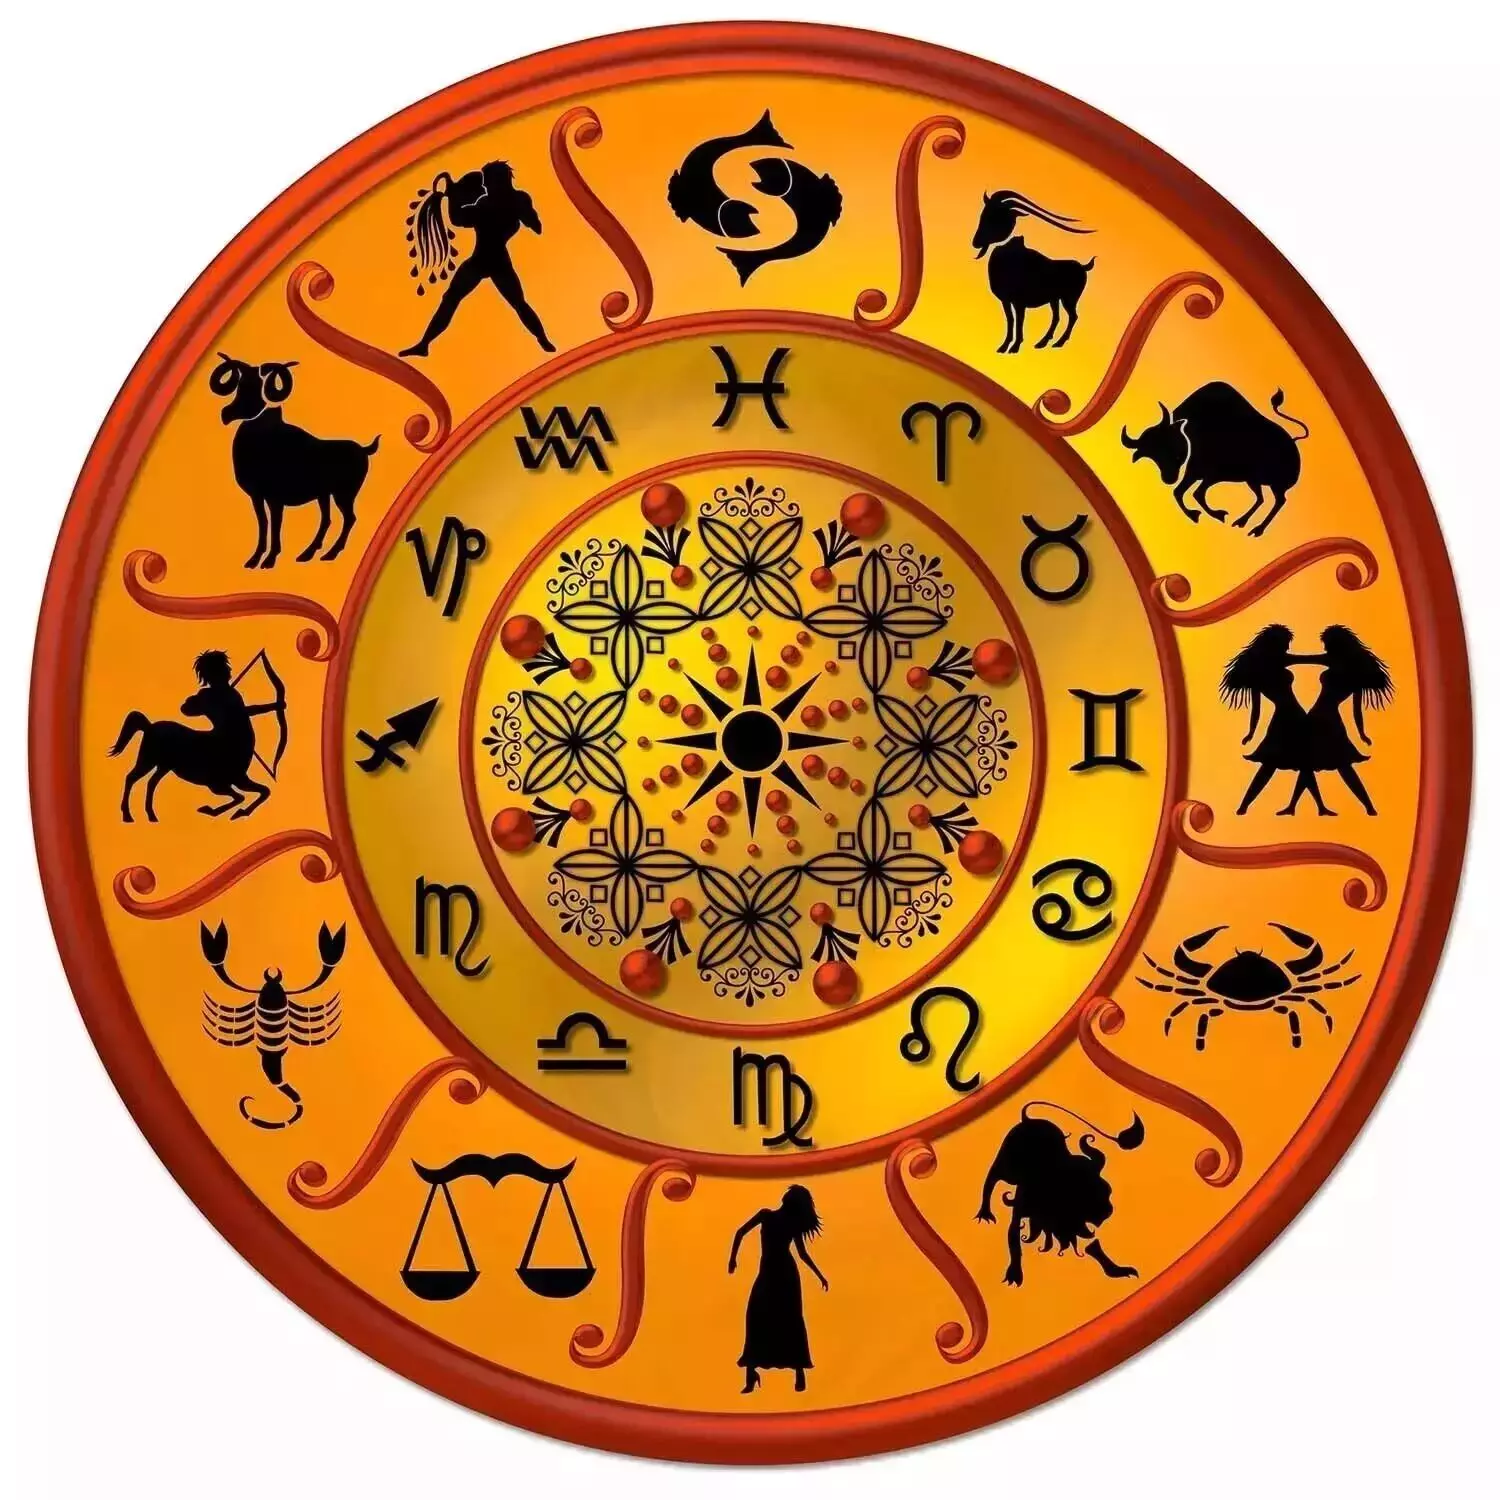 30 November – Know your todays horoscope